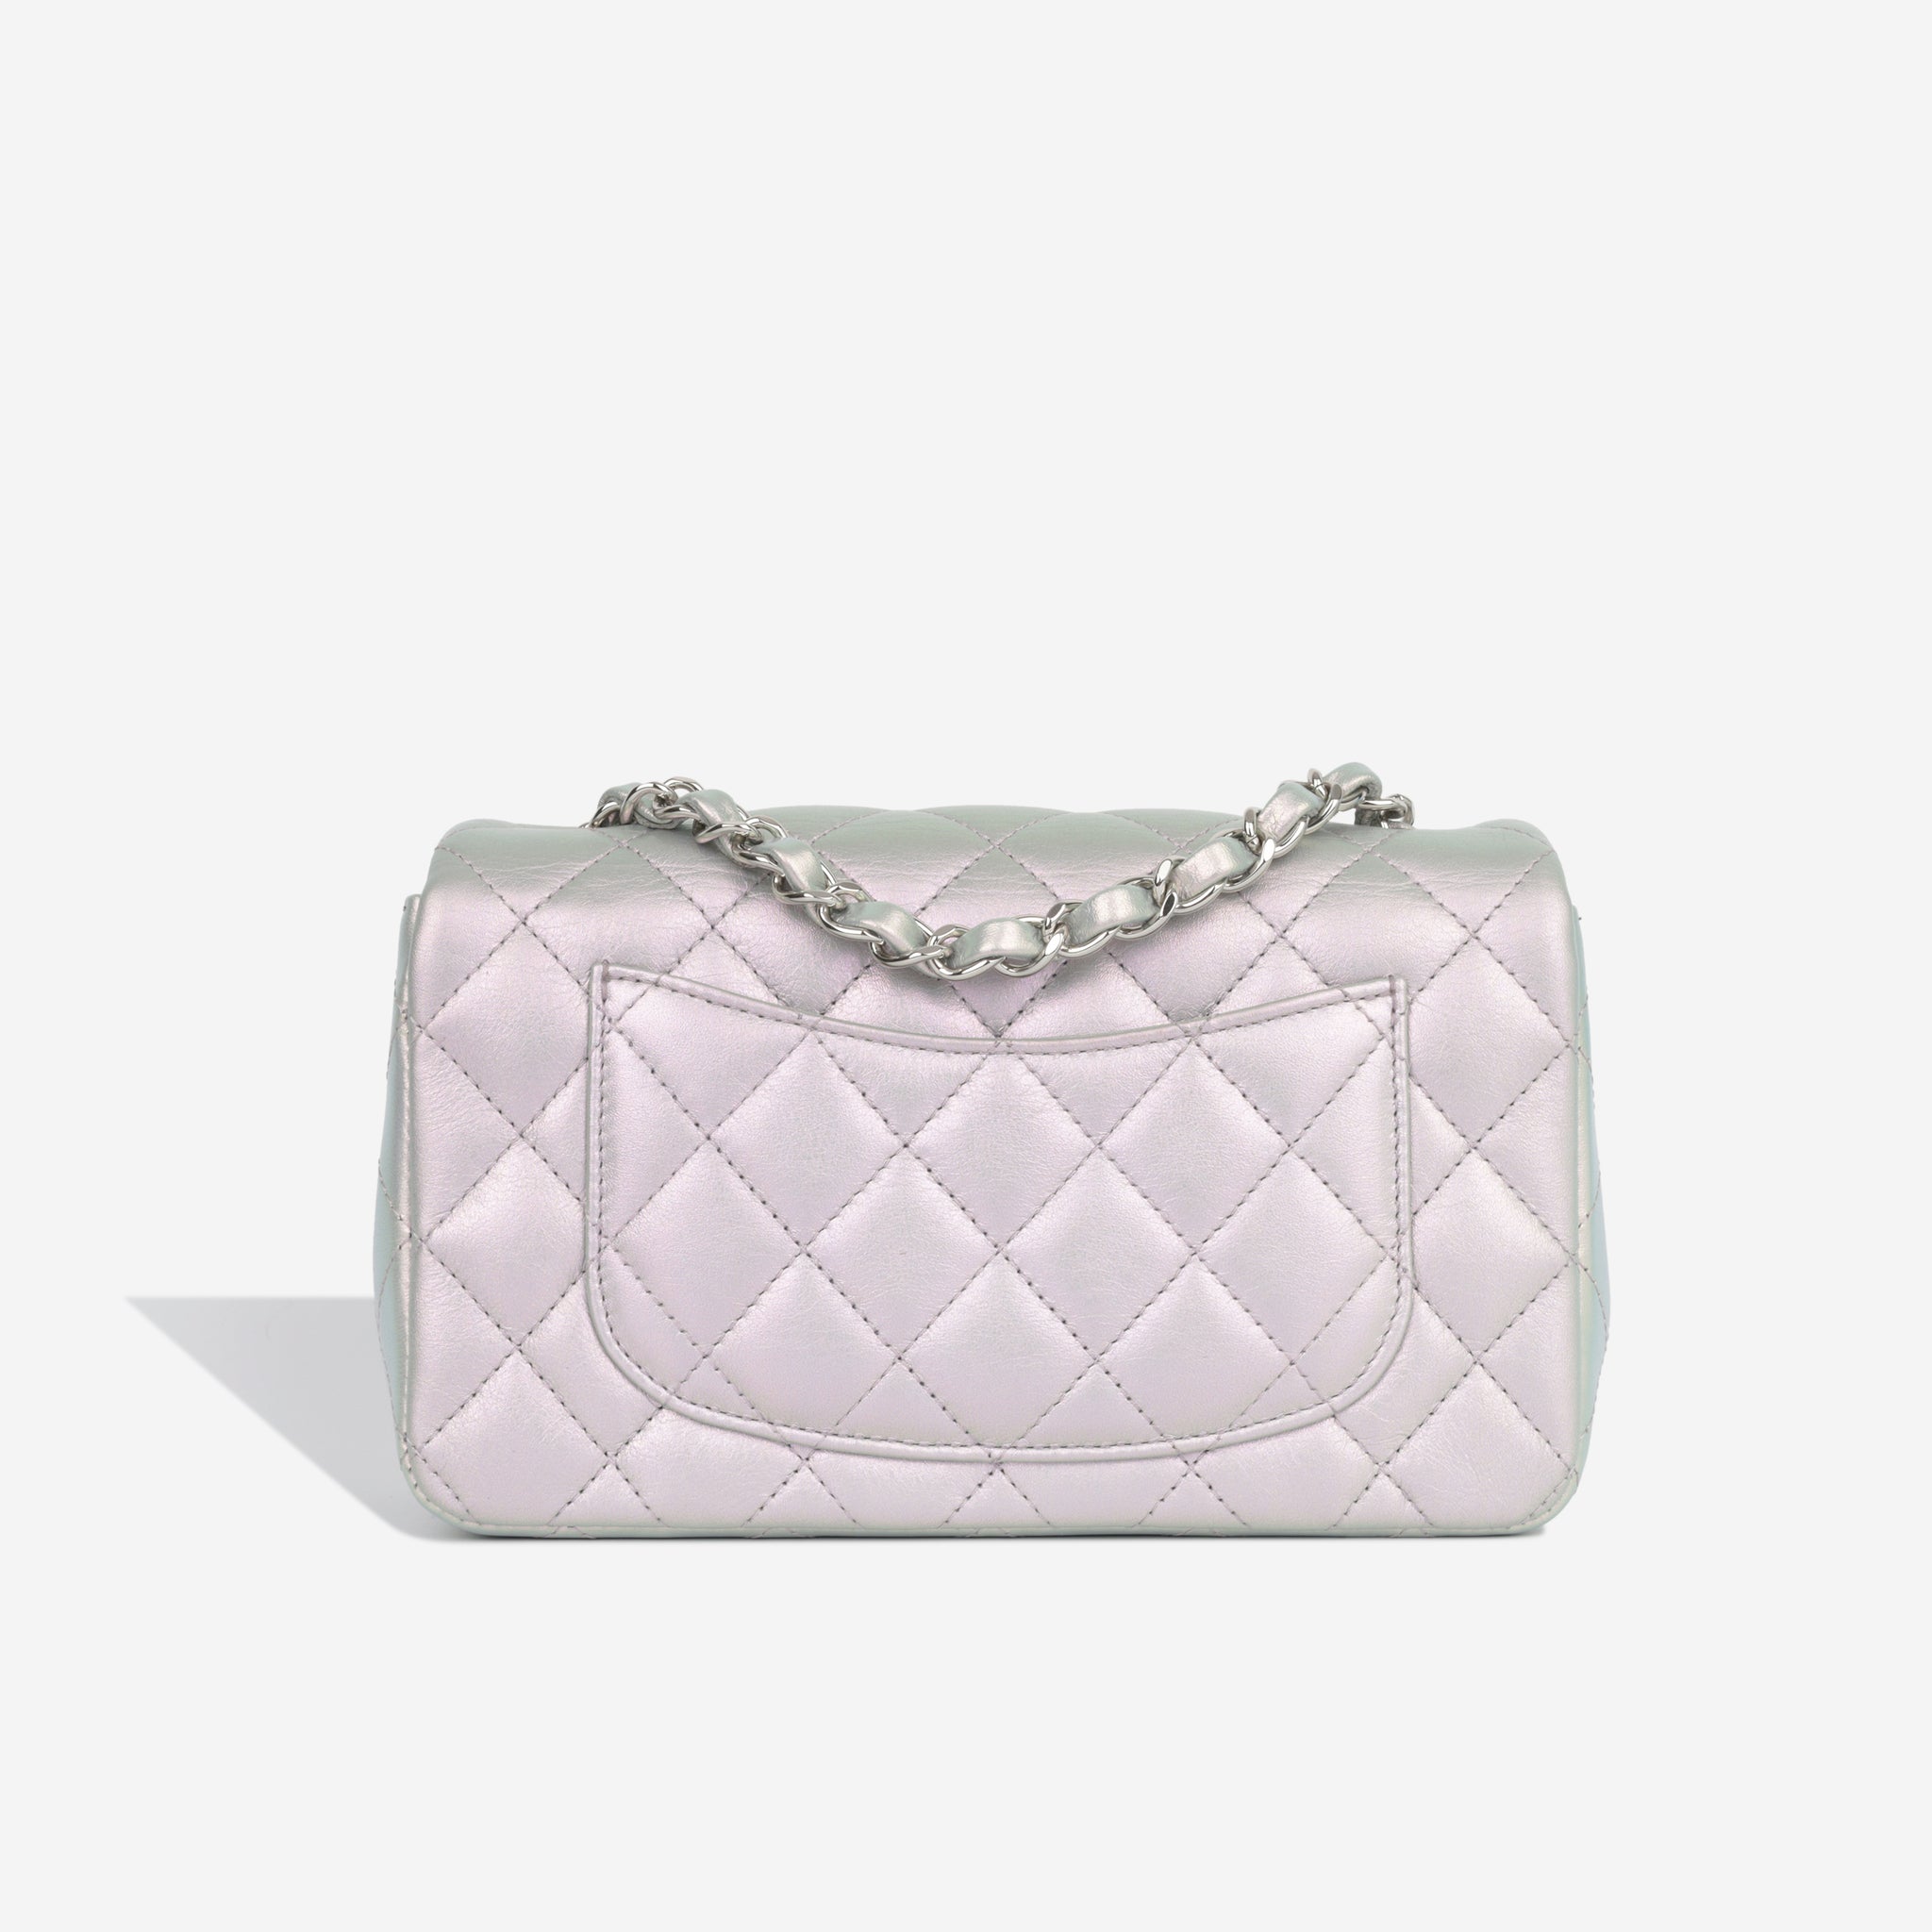 Chanel - Classic Flap Bag - Mini Rectangular - Lilac Iridescent - SHW -  Immaculate